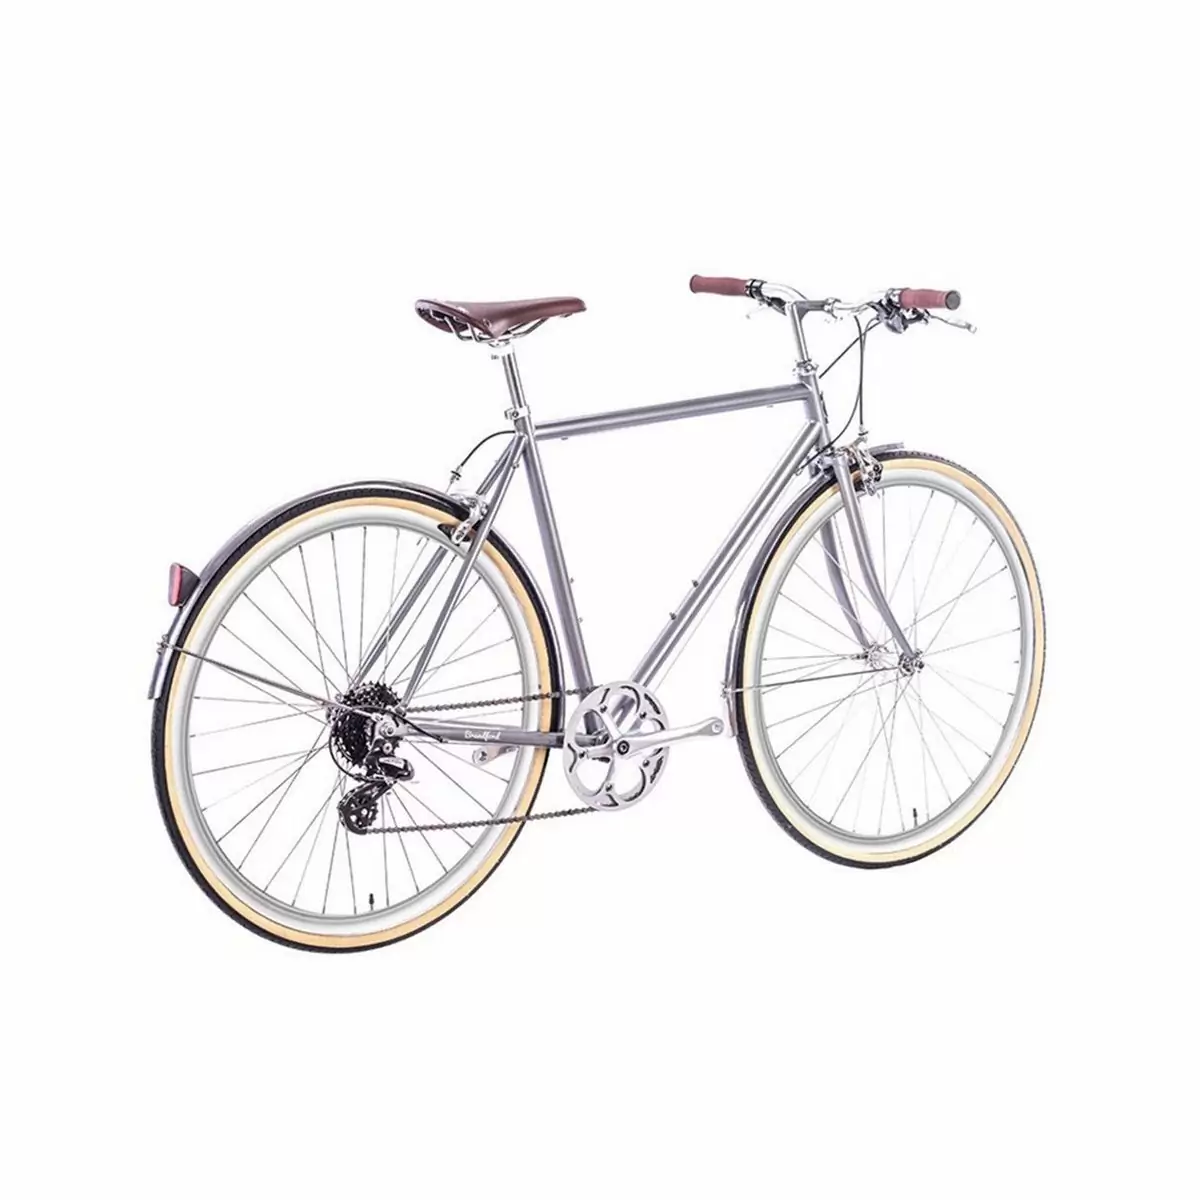 Bicicleta urbana ODYSSEY 8spd Brandford prata grande 58cm #2